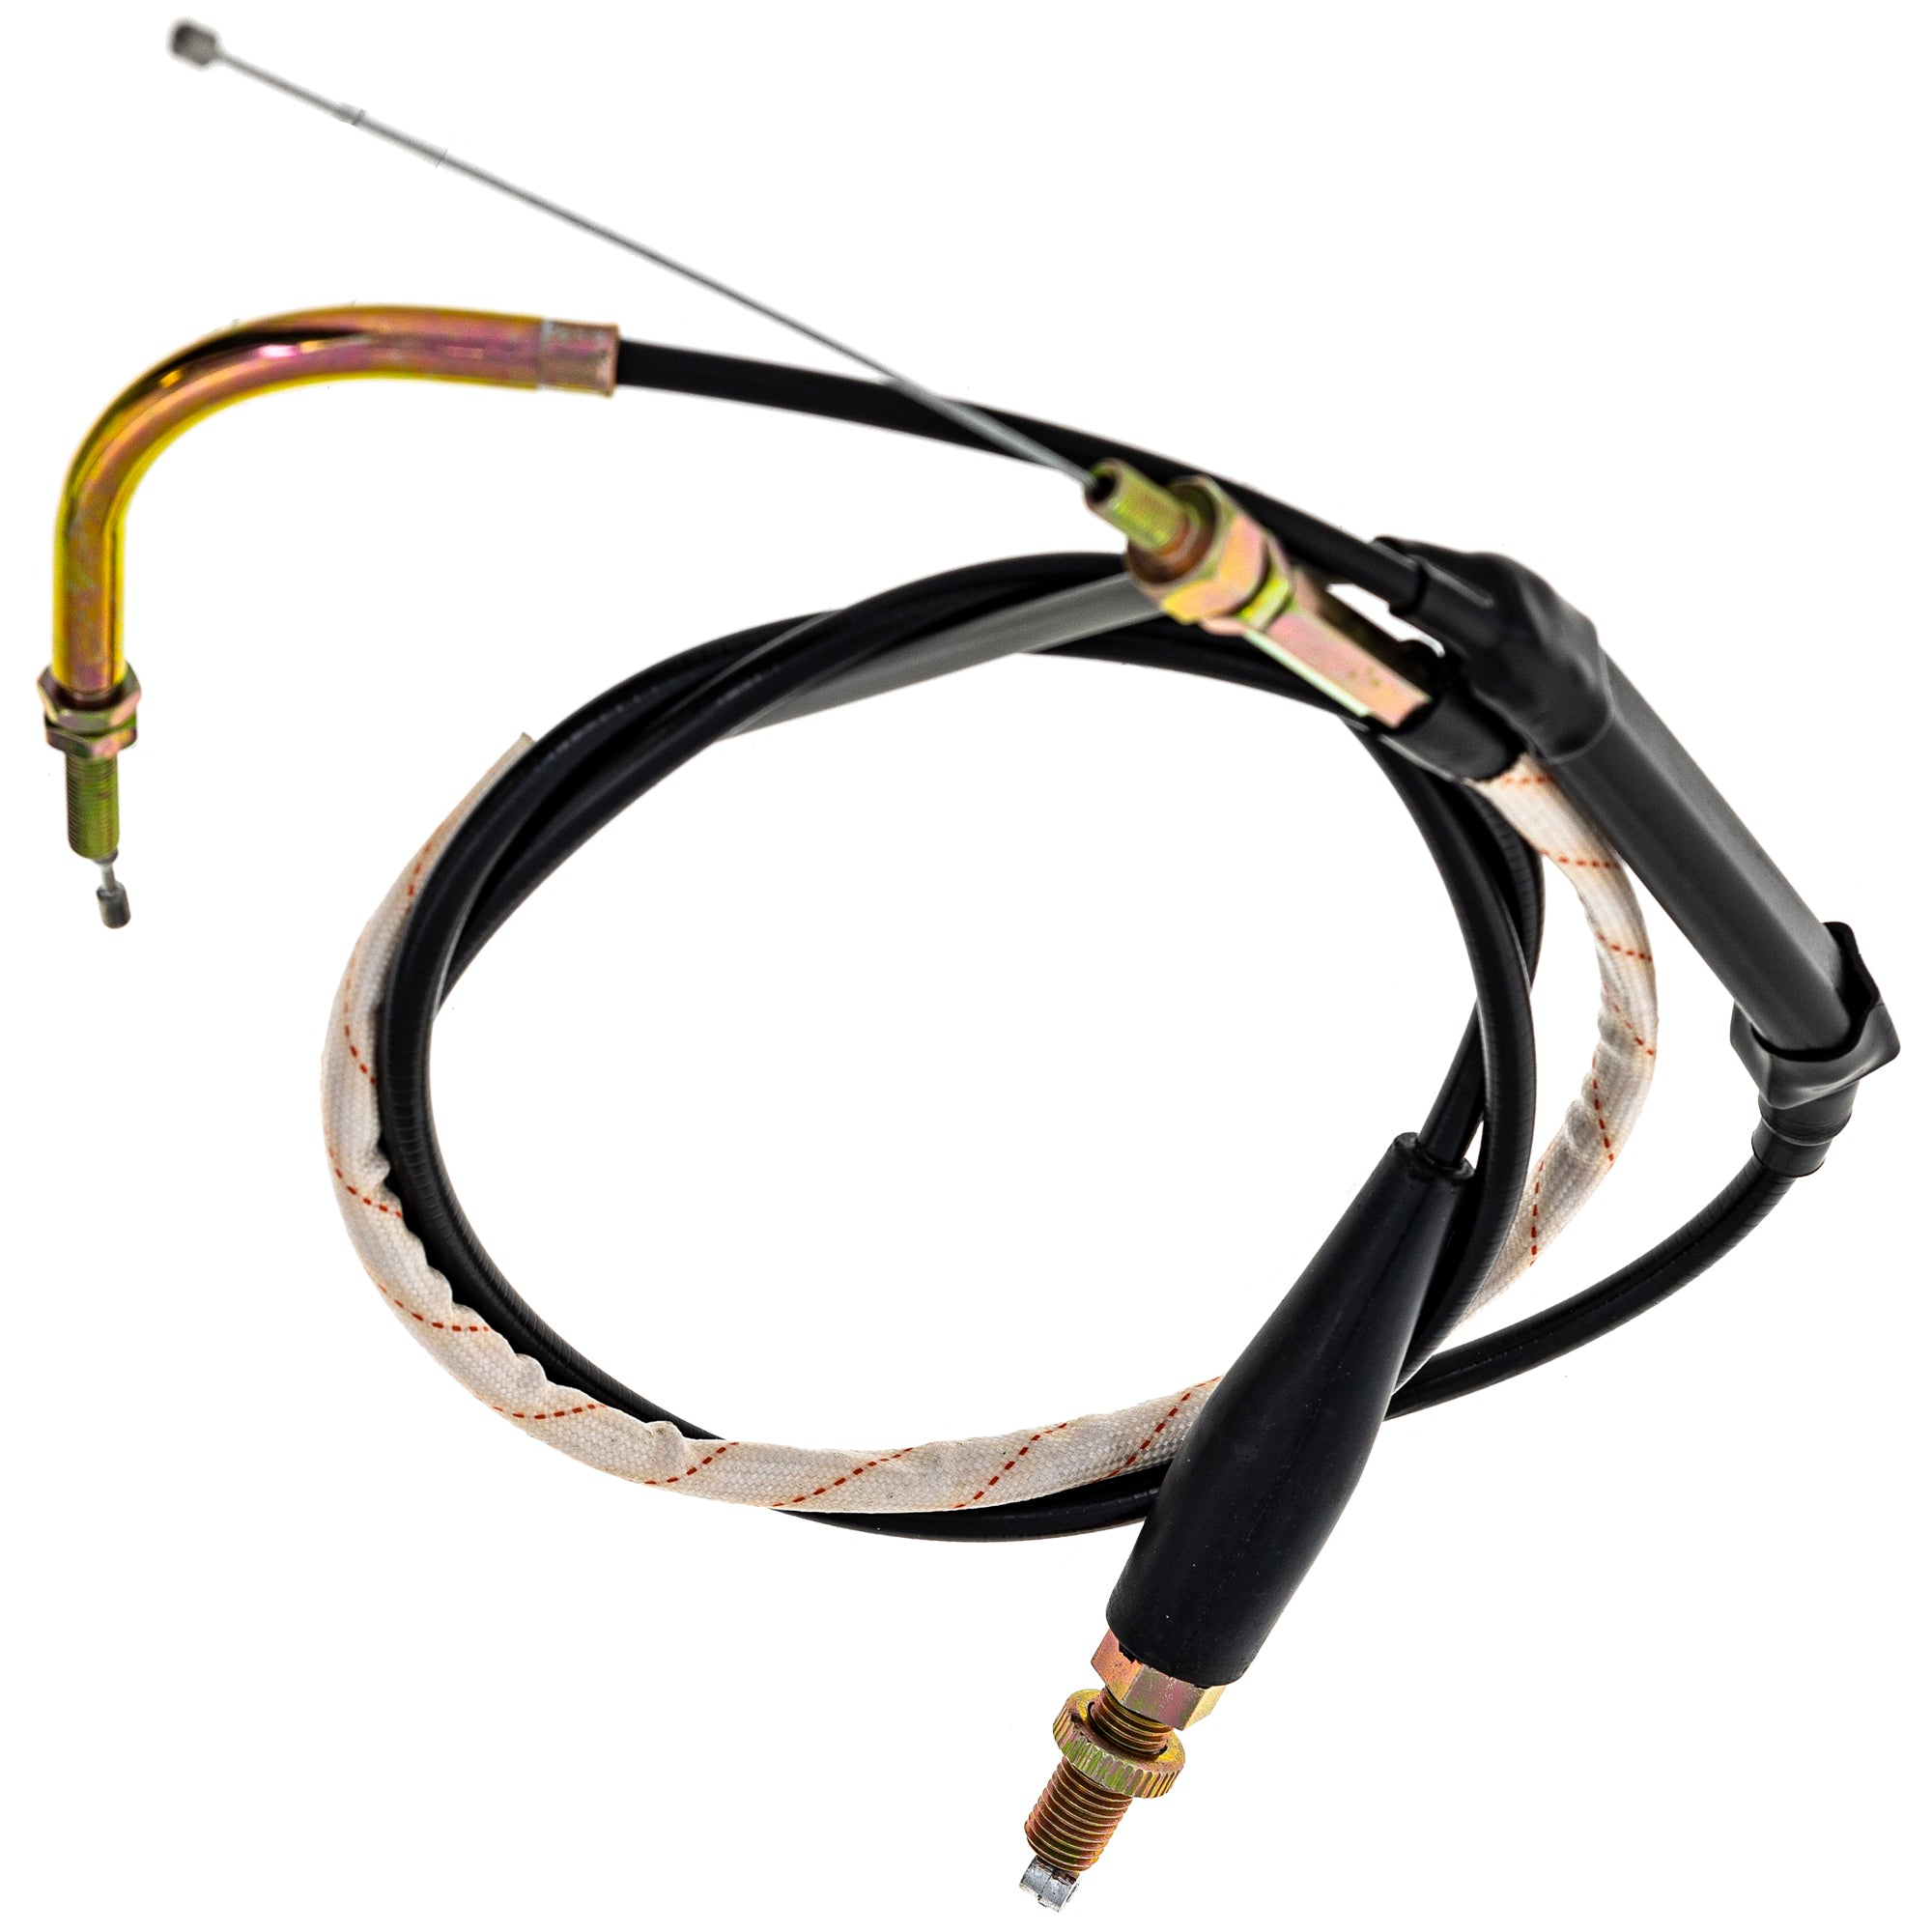 Throttle Cable for Polaris Scrambler 400 Sport 400L 7080728 ATV